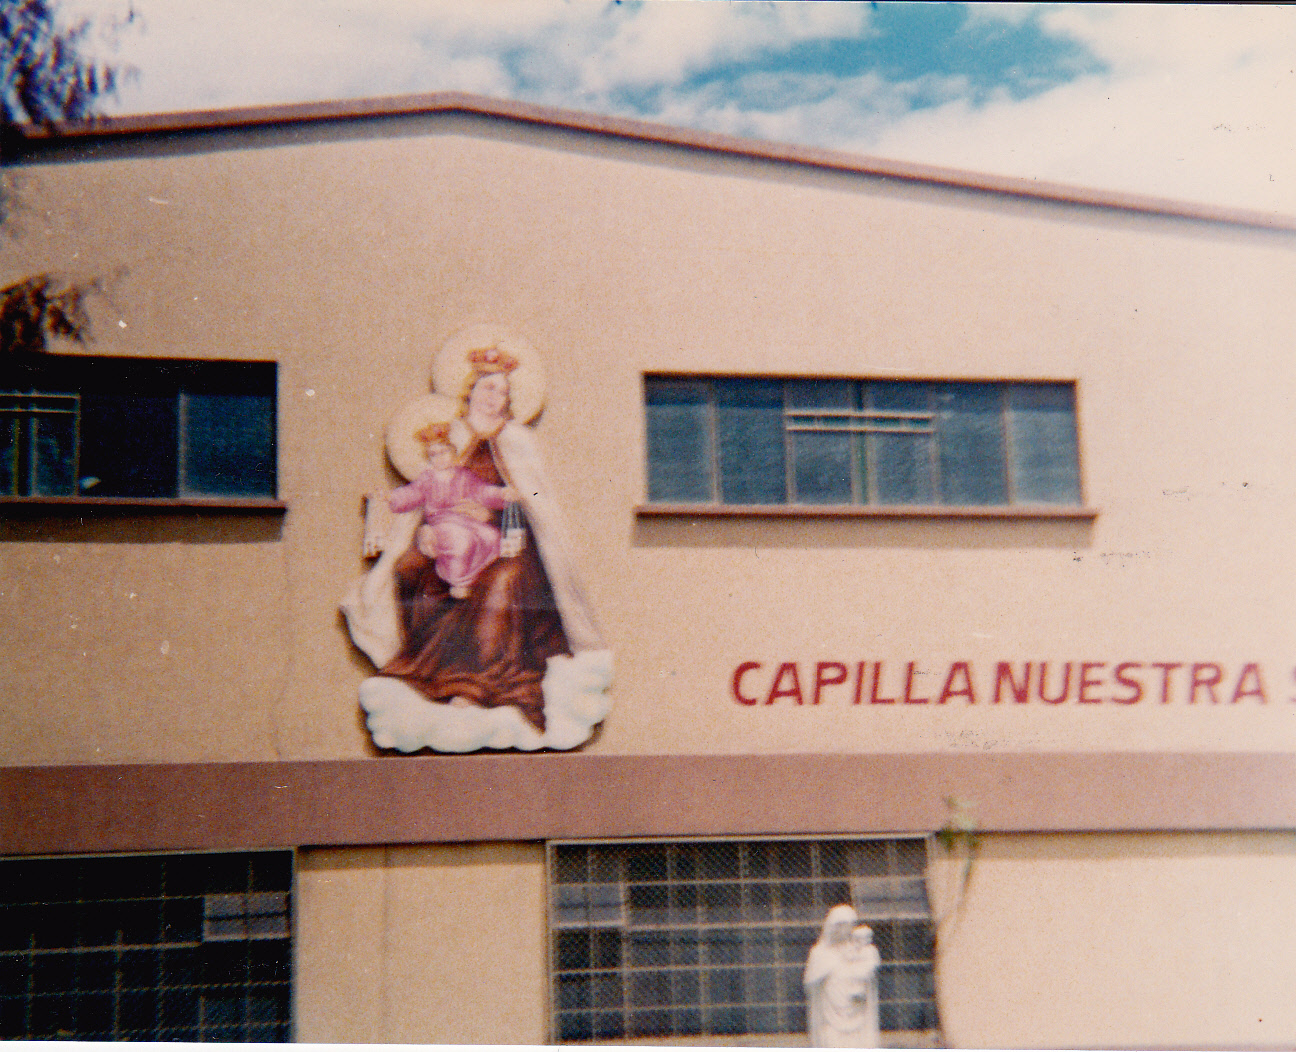 https://arquimedia.s3.amazonaws.com/330/historia/capilla-nsc1jpg.jpg